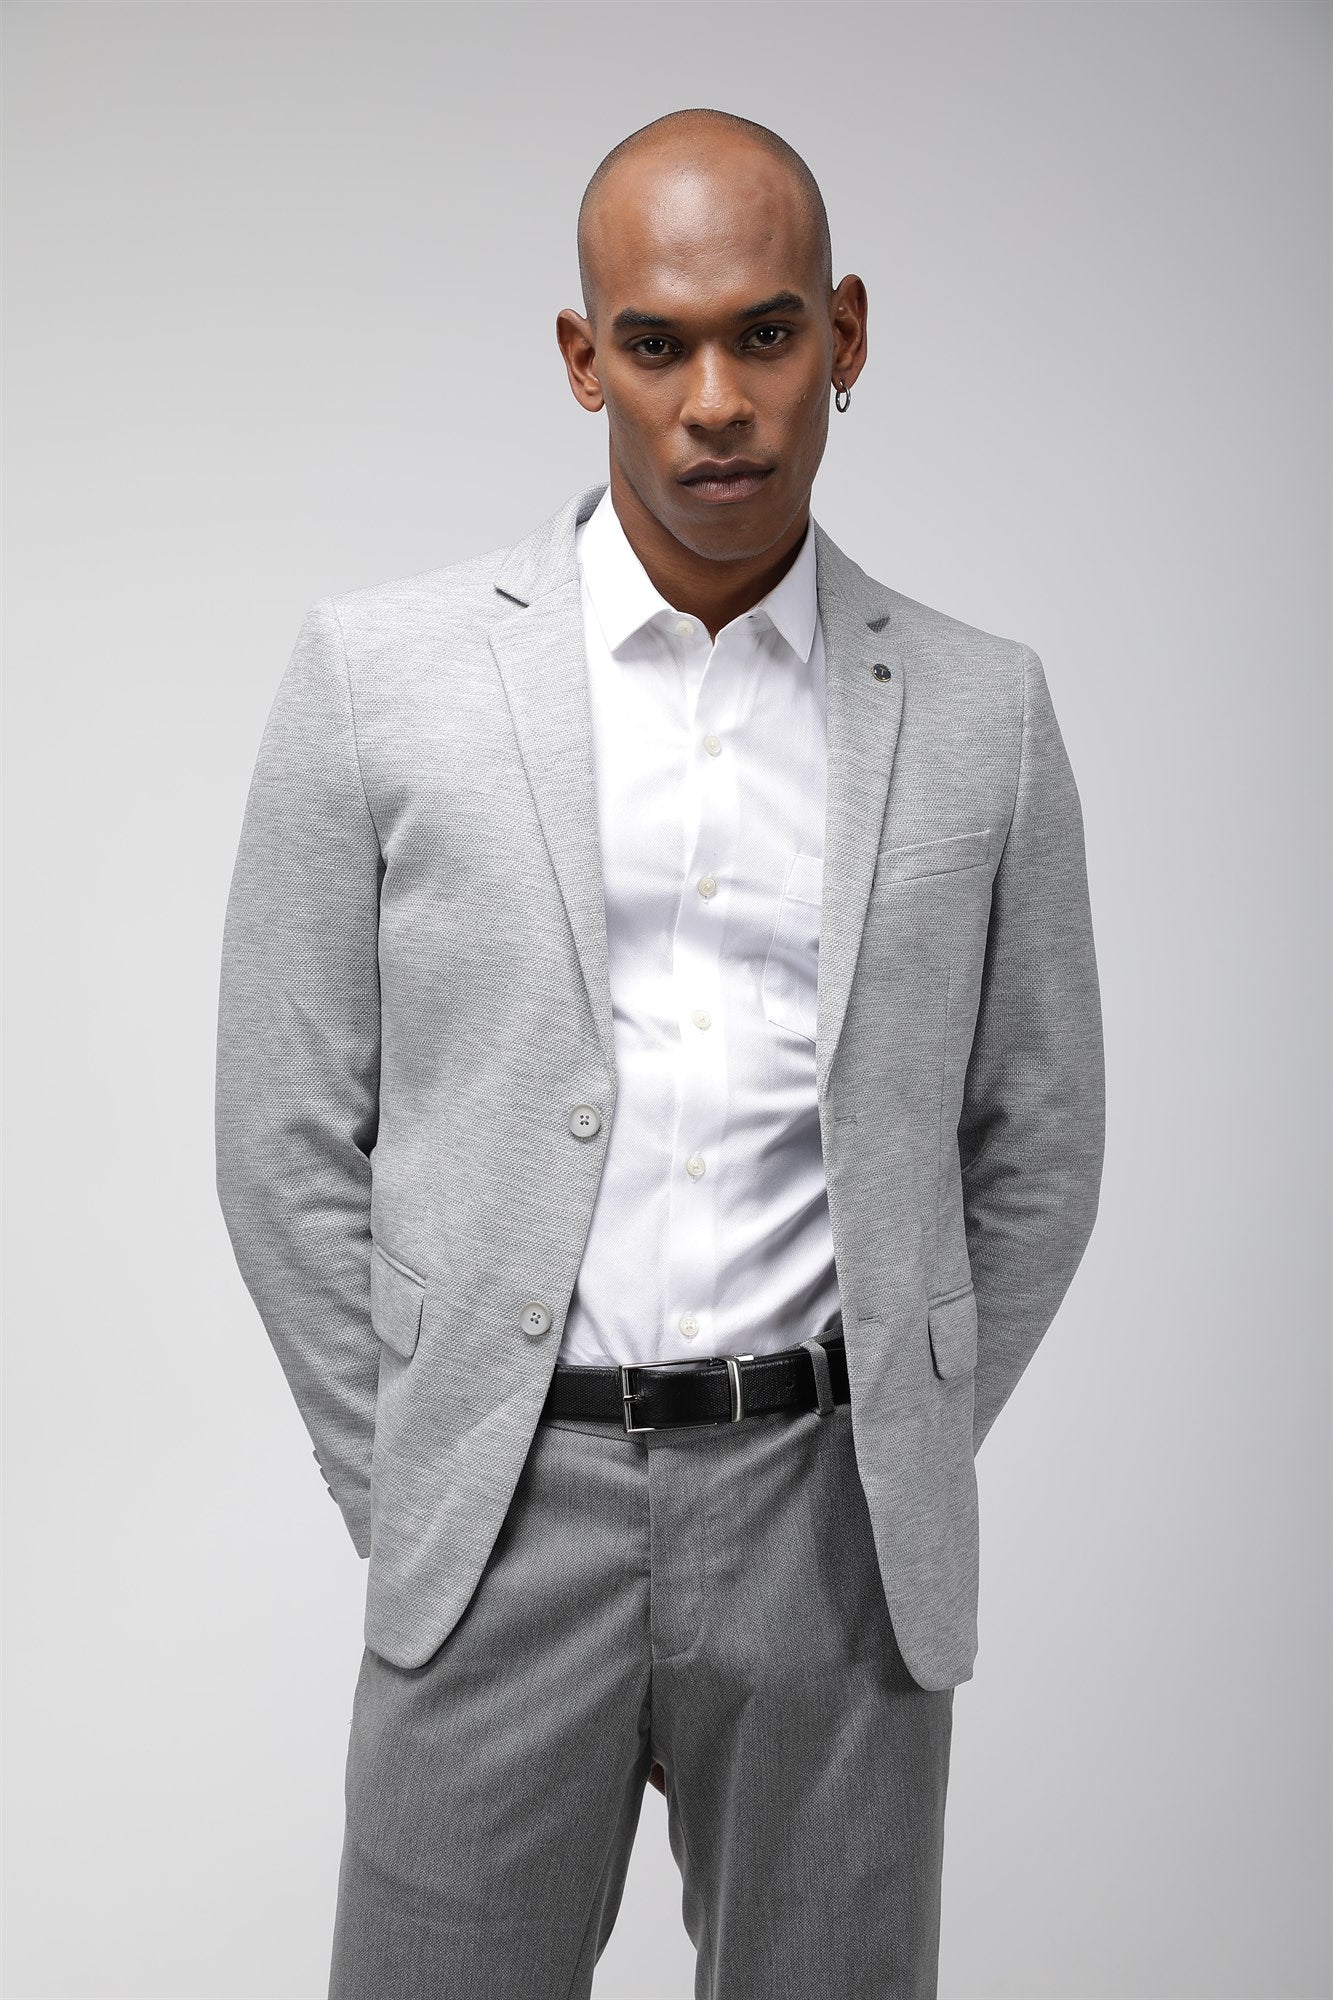 T the brand Super Slim Fit Knit Blazer - Grey